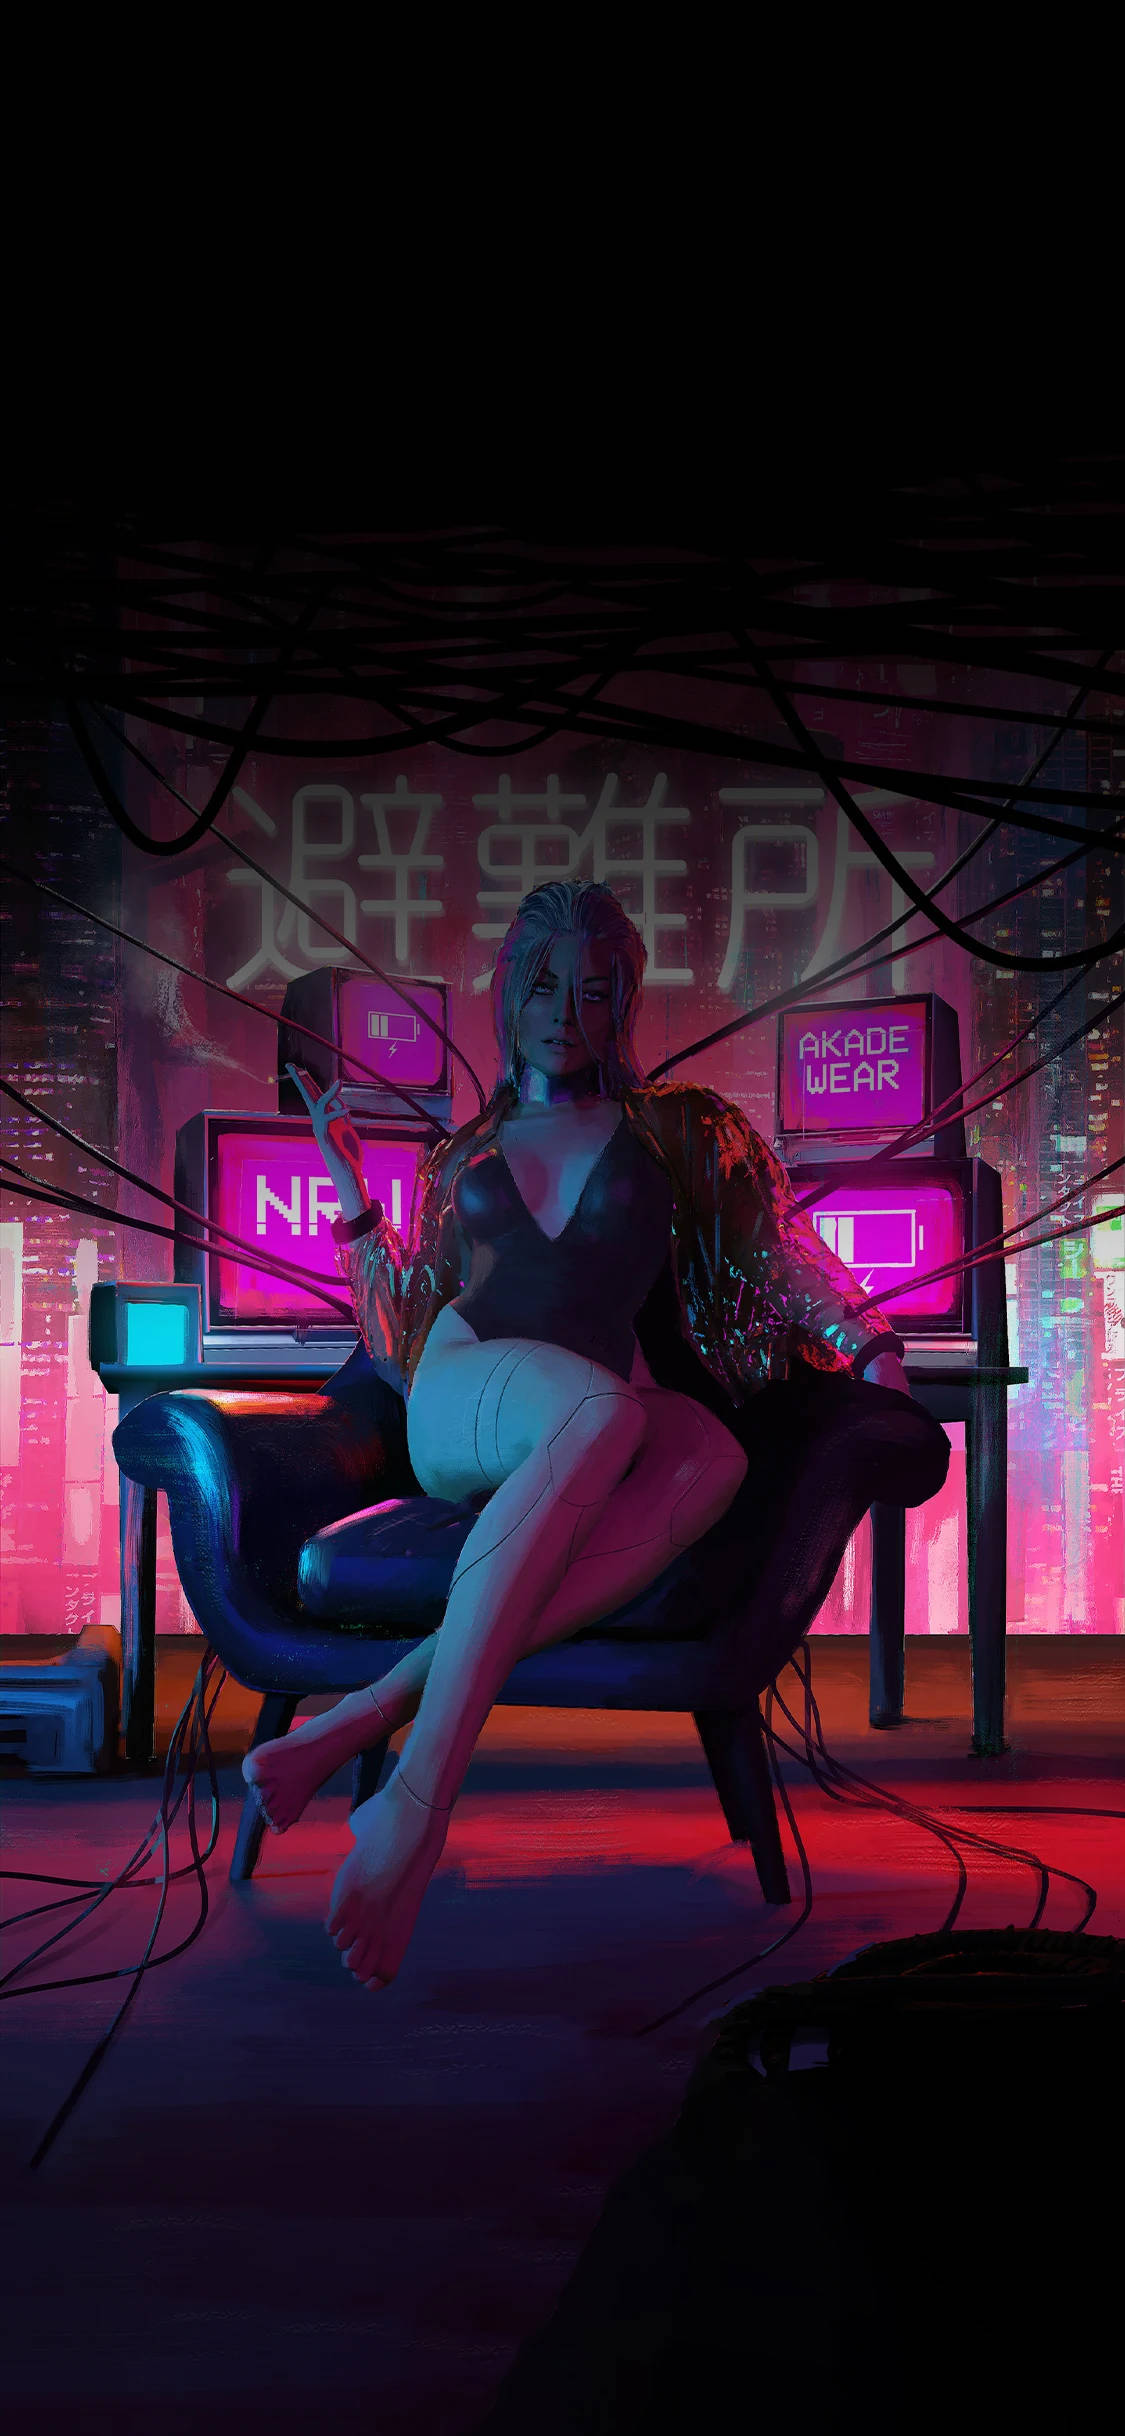 Cyberpunkfrau Auf Einem Sofa Iphone Wallpaper